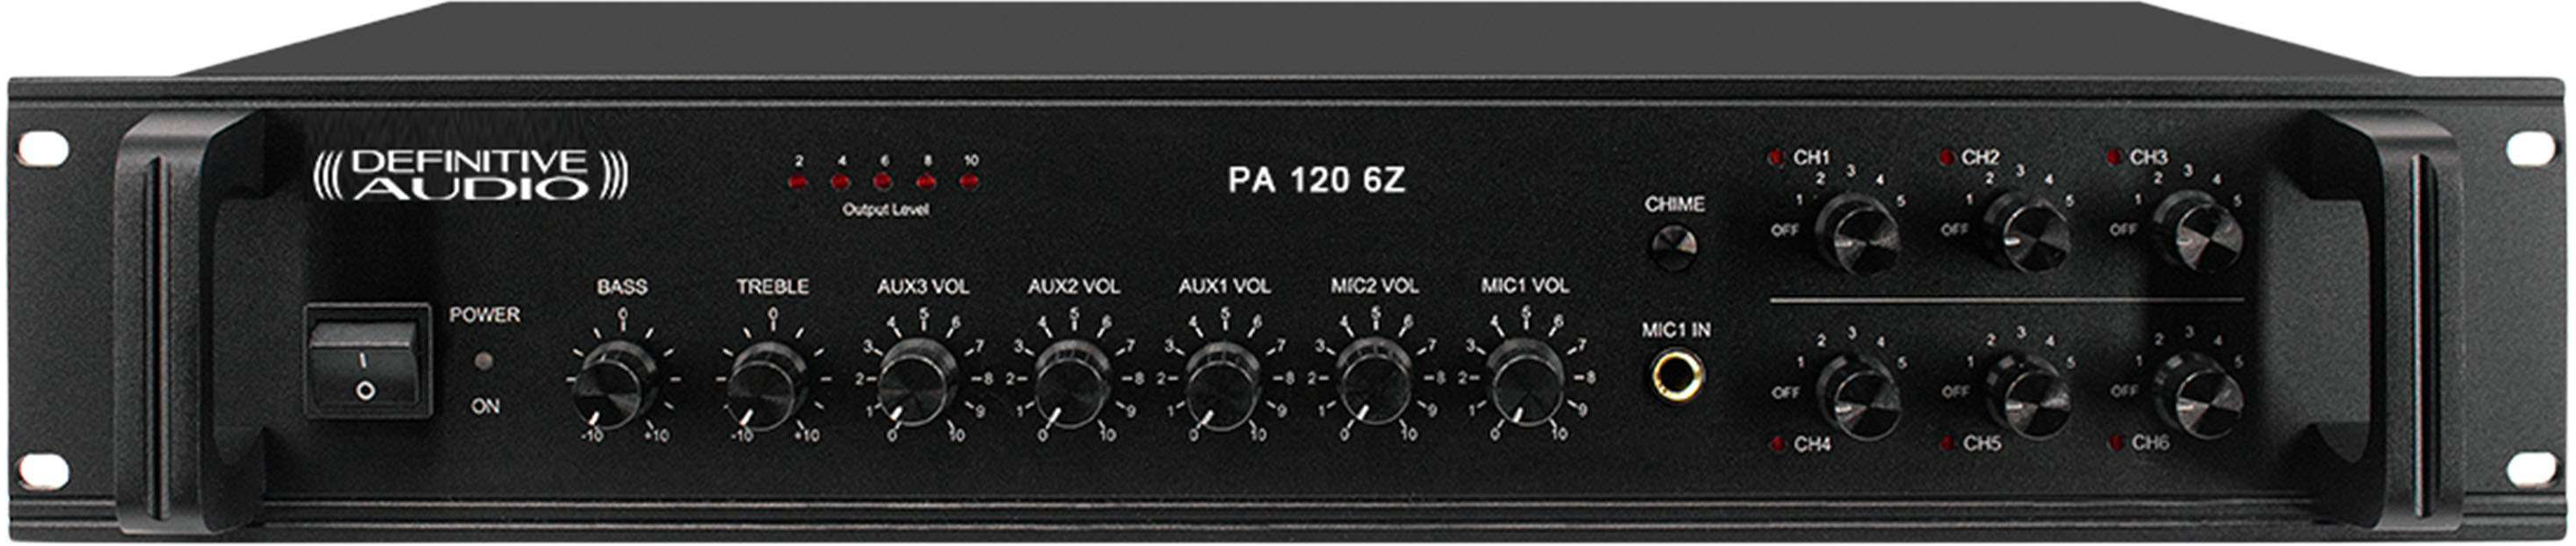 Definitive Audio Pa 120 6z - Multikanäle Endstufe - Main picture